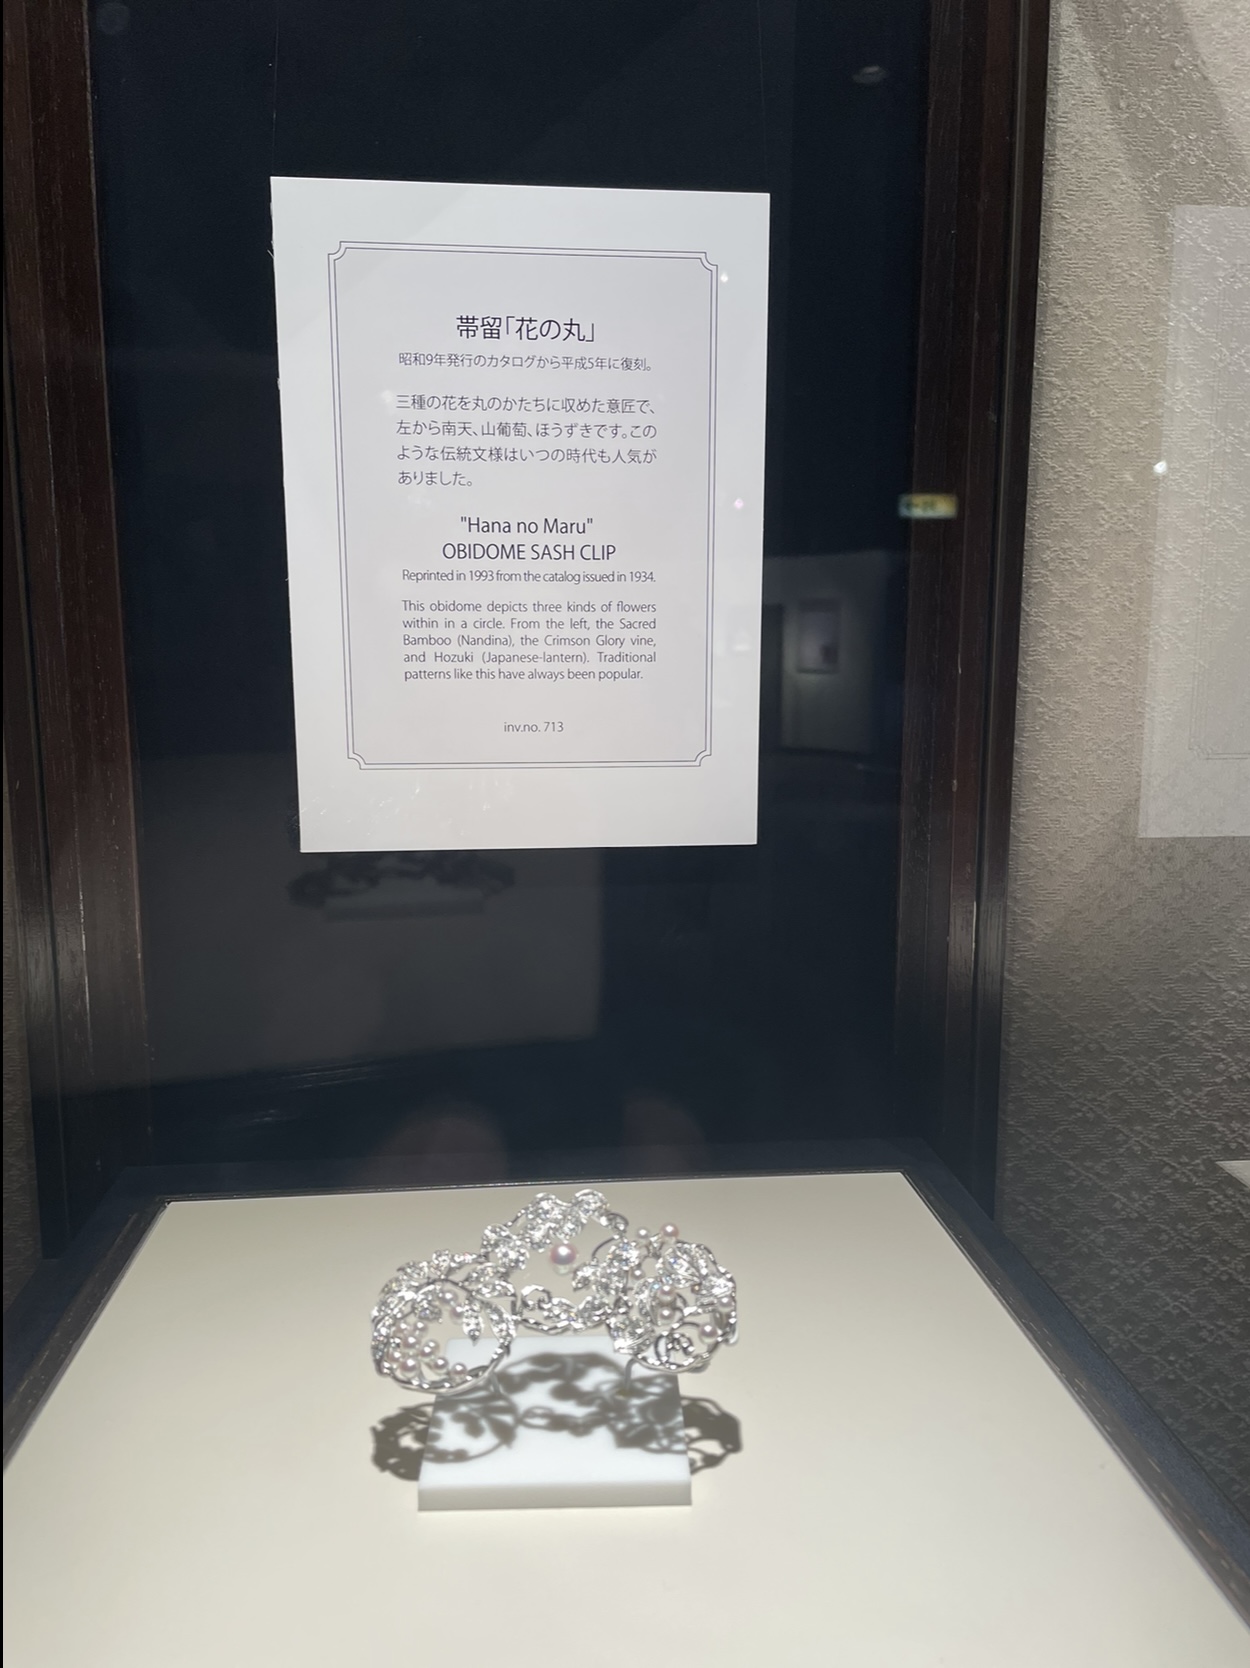 Hana no Maru sash clip - Mikimoto Pearl Museum